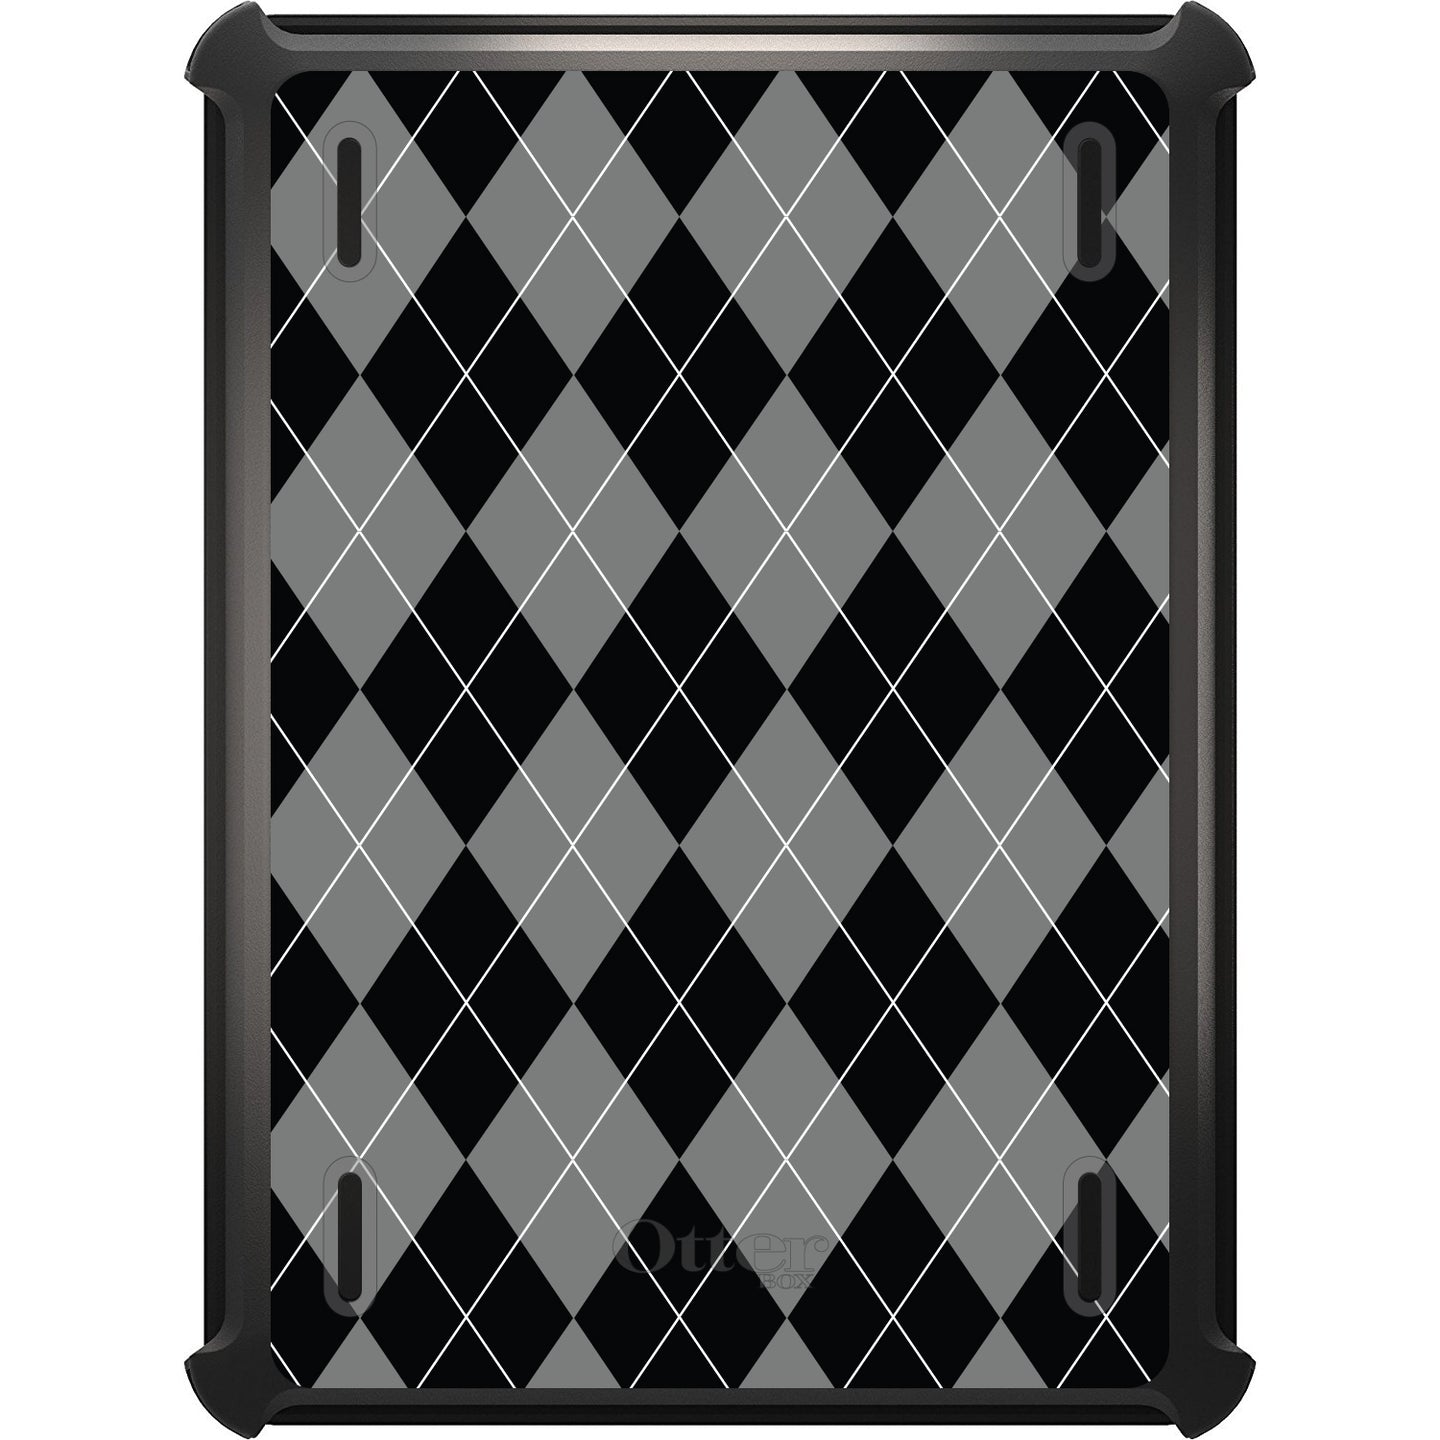 DistinctInk™ OtterBox Defender Series Case for Apple iPad / iPad Pro / iPad Air / iPad Mini - Black Grey White Argyle